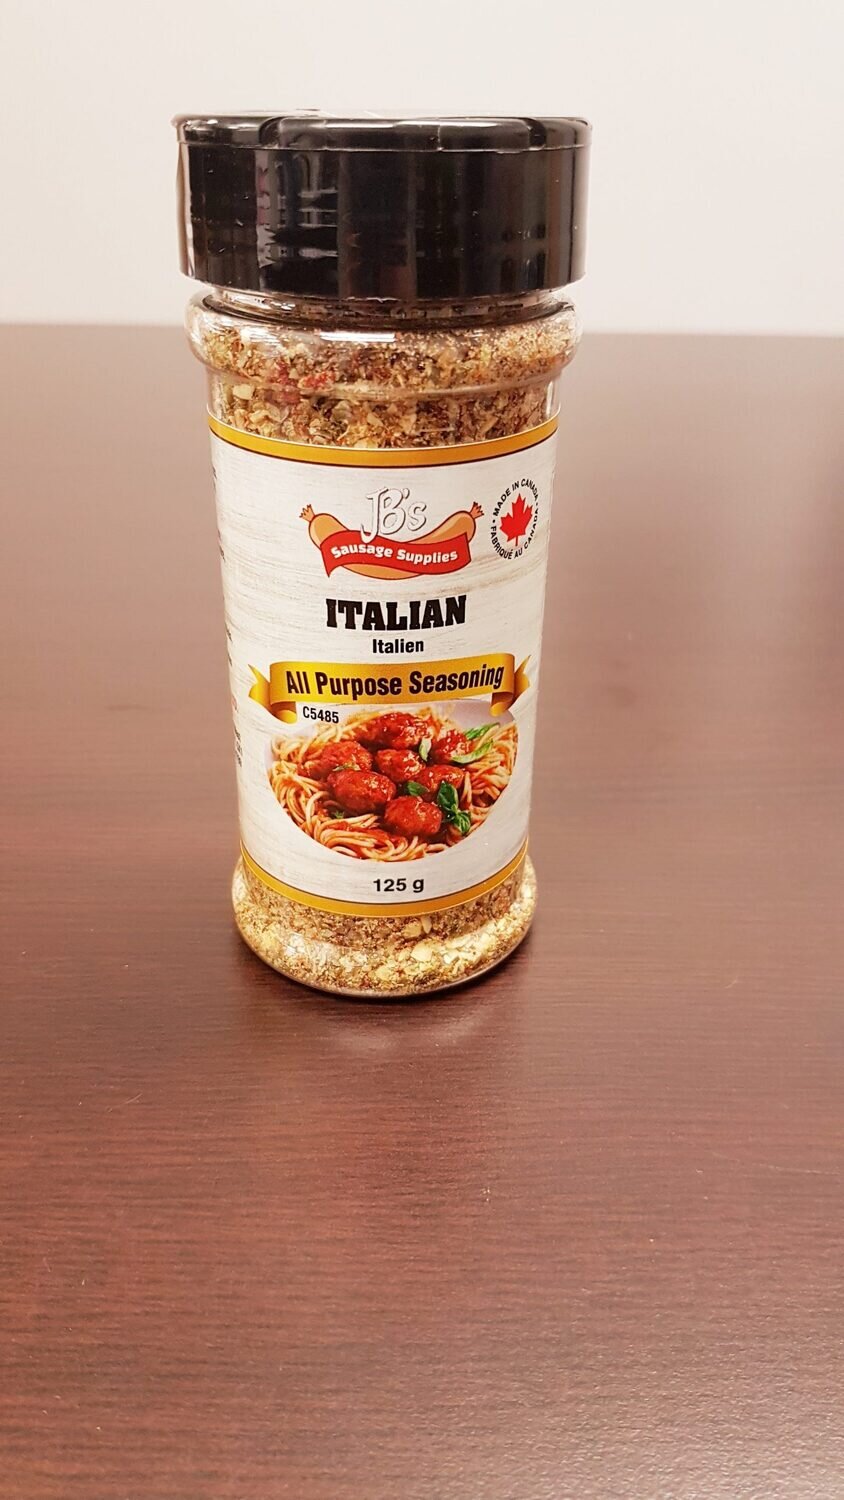 JB's Italian All Purpose Seasoning